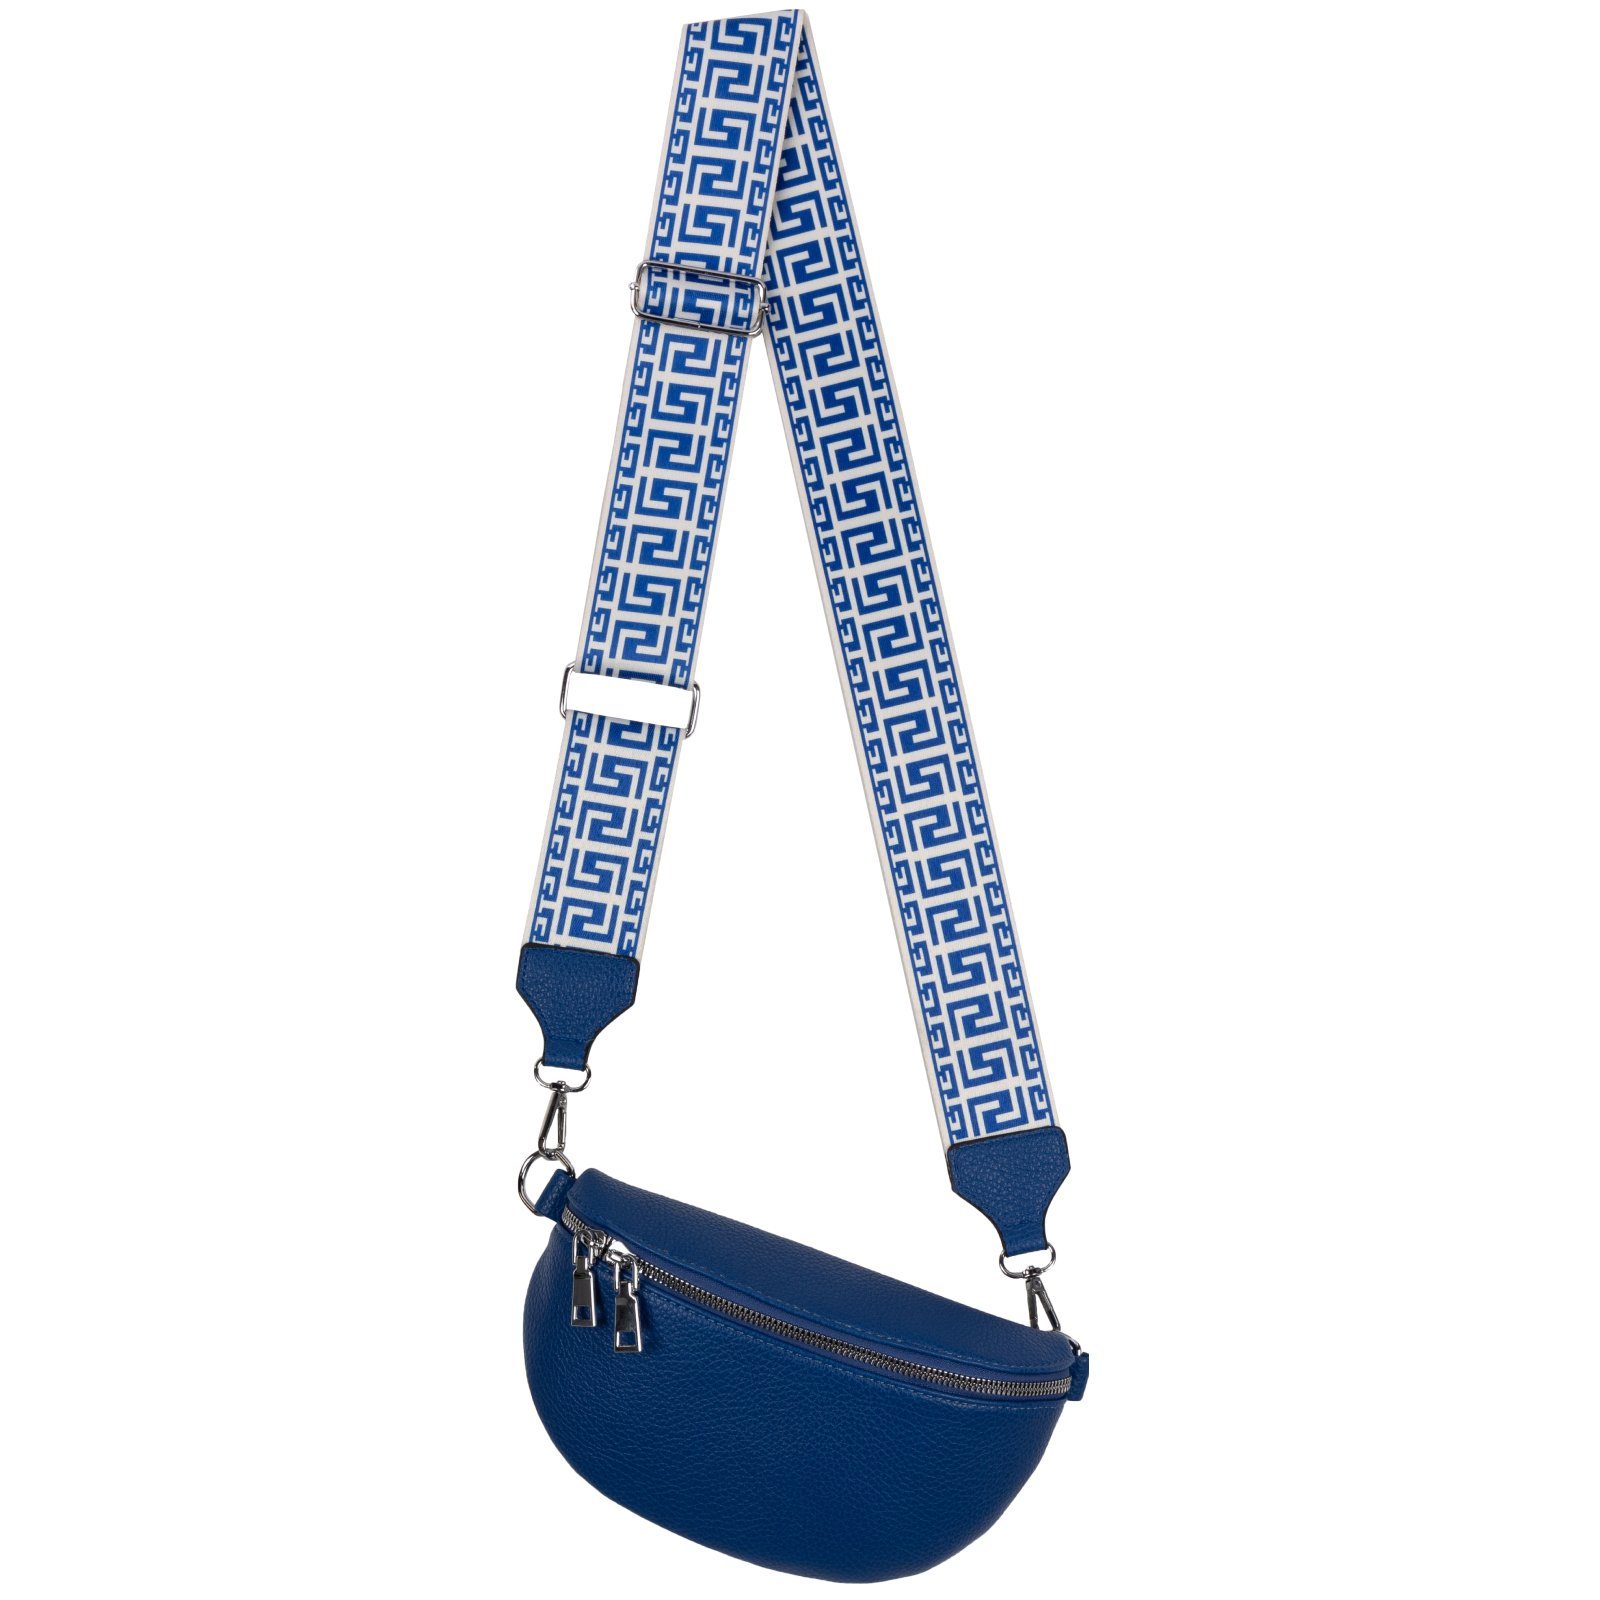 EAAKIE Gürteltasche Bauchtasche Umhängetasche Crossbody-Bag Hüfttasche Kunstleder Italy-De, als Schultertasche, CrossOver, Umhängetasche tragbar BLUE